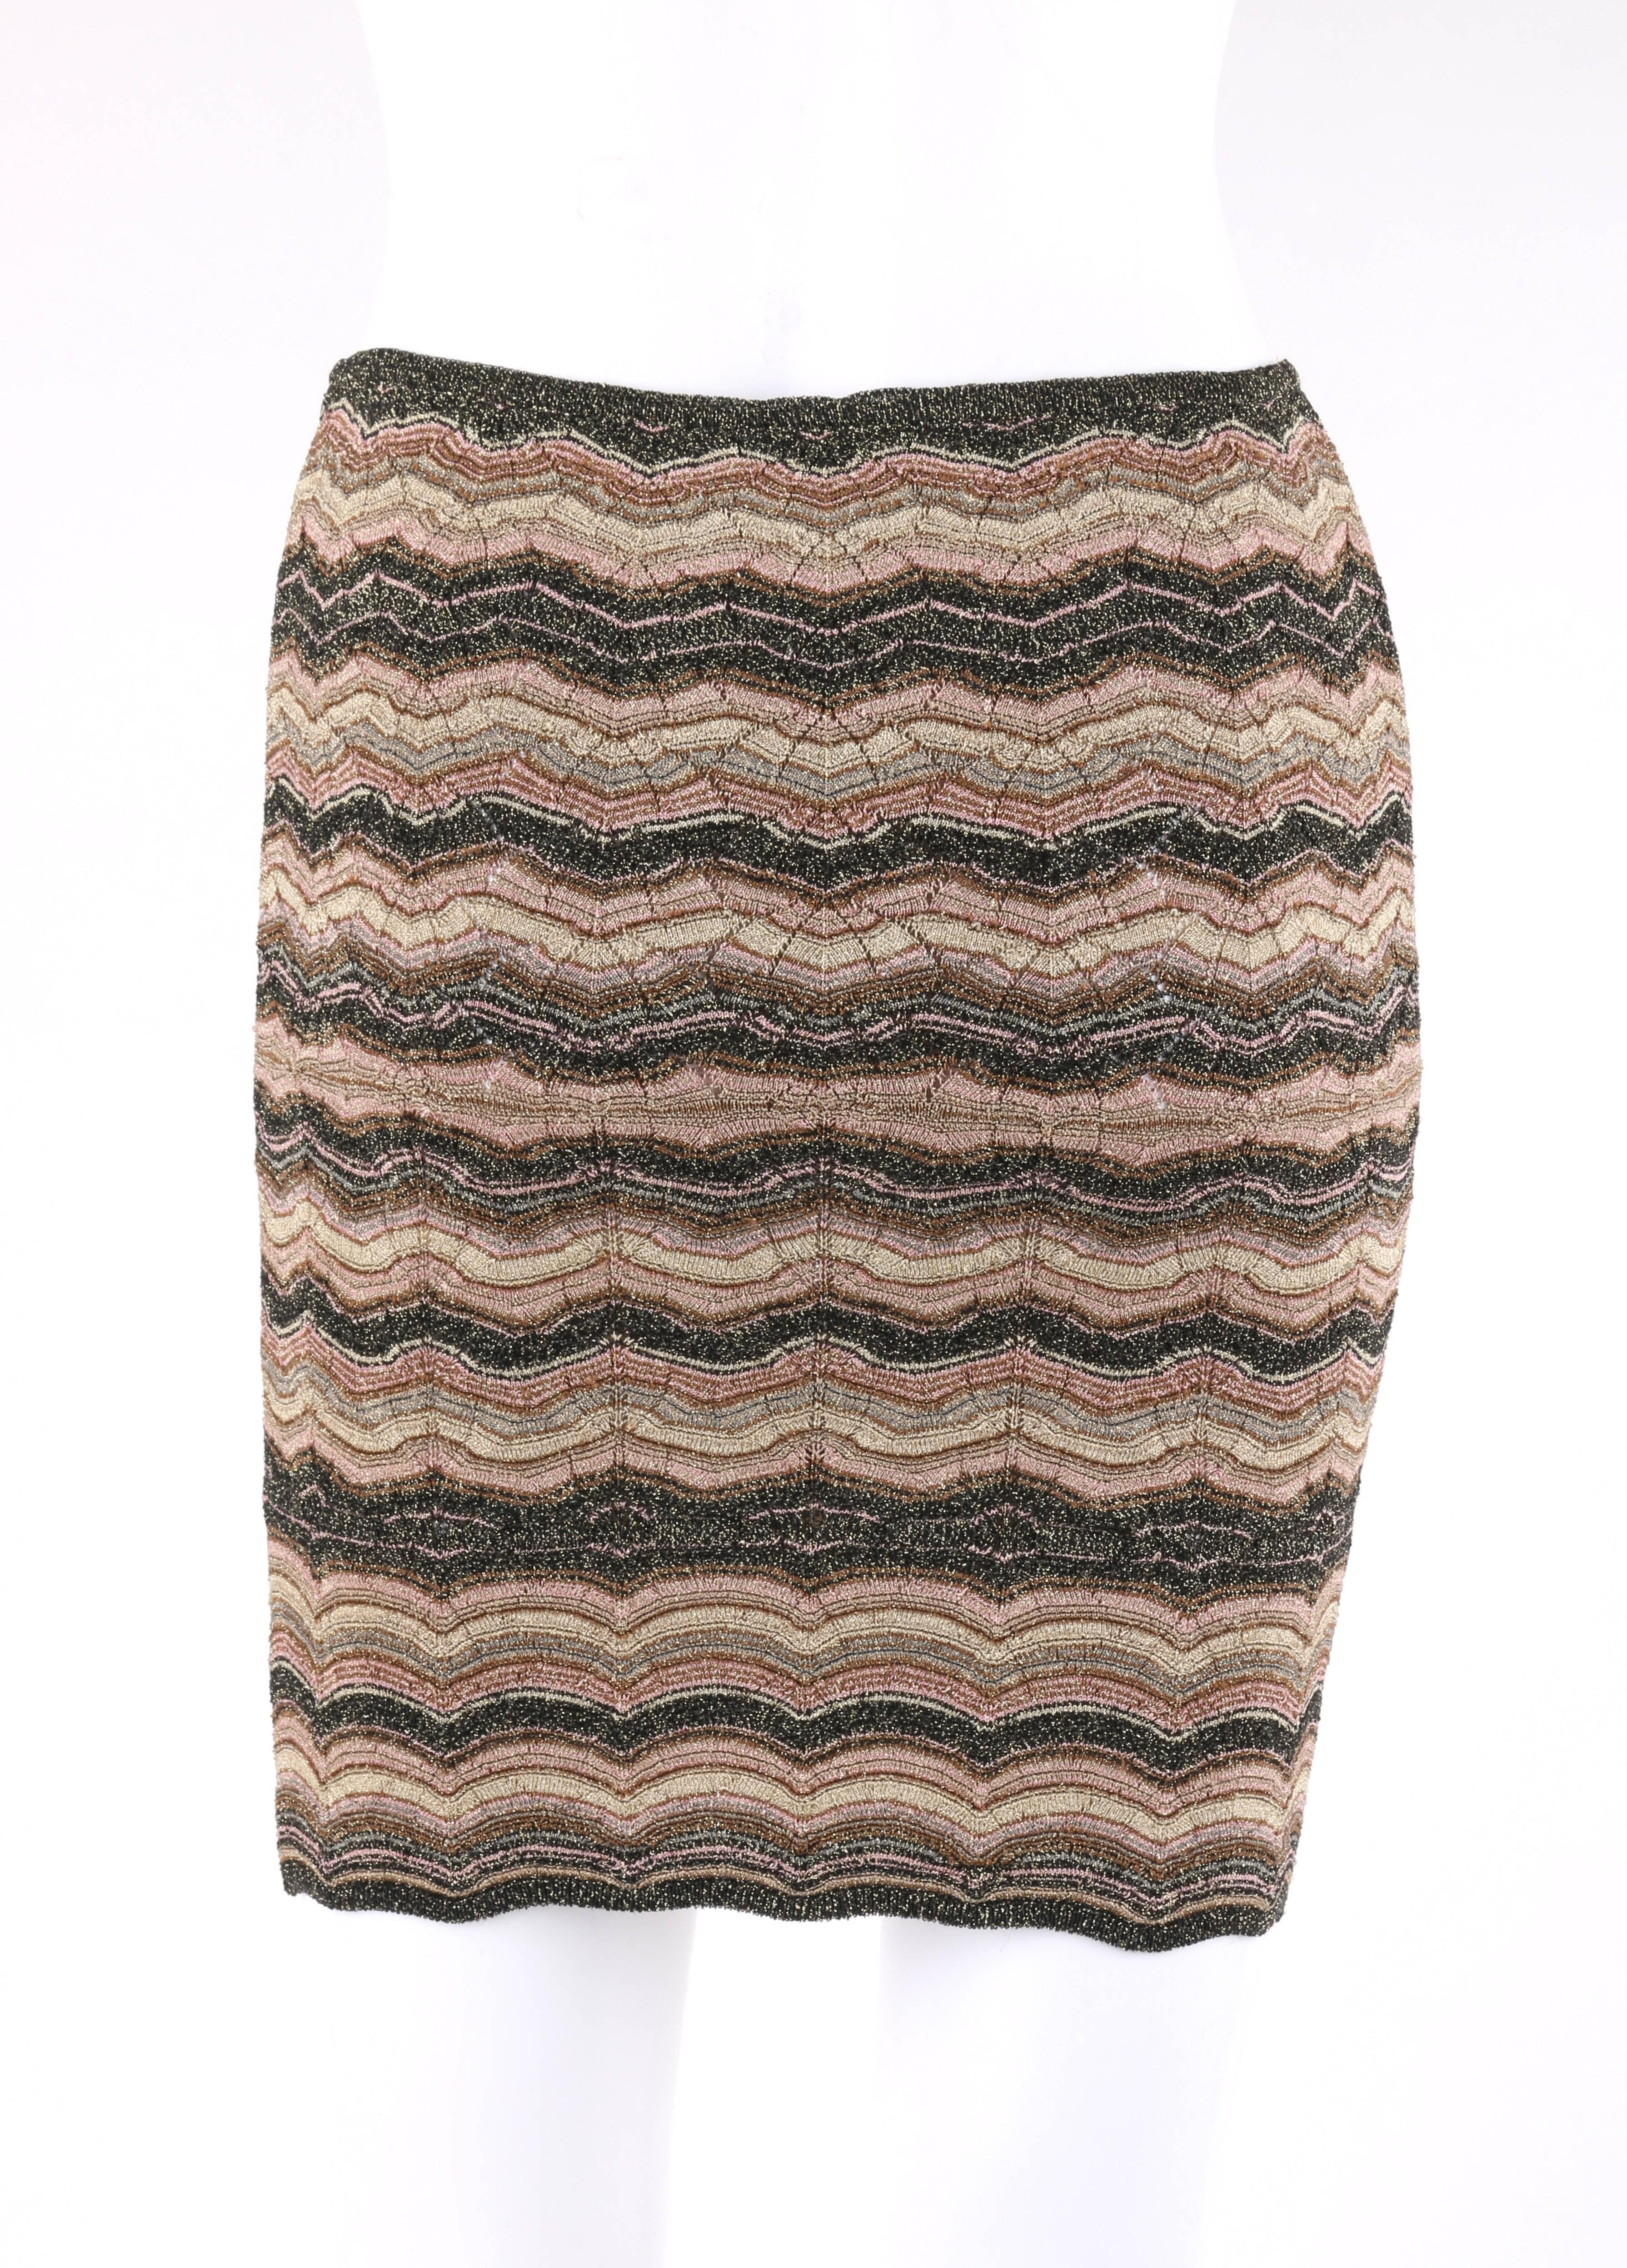 Brown MISSONI Metallic Knit Convertible 3-in-1 Pencil Skirt Tube Top Cowl Scarf